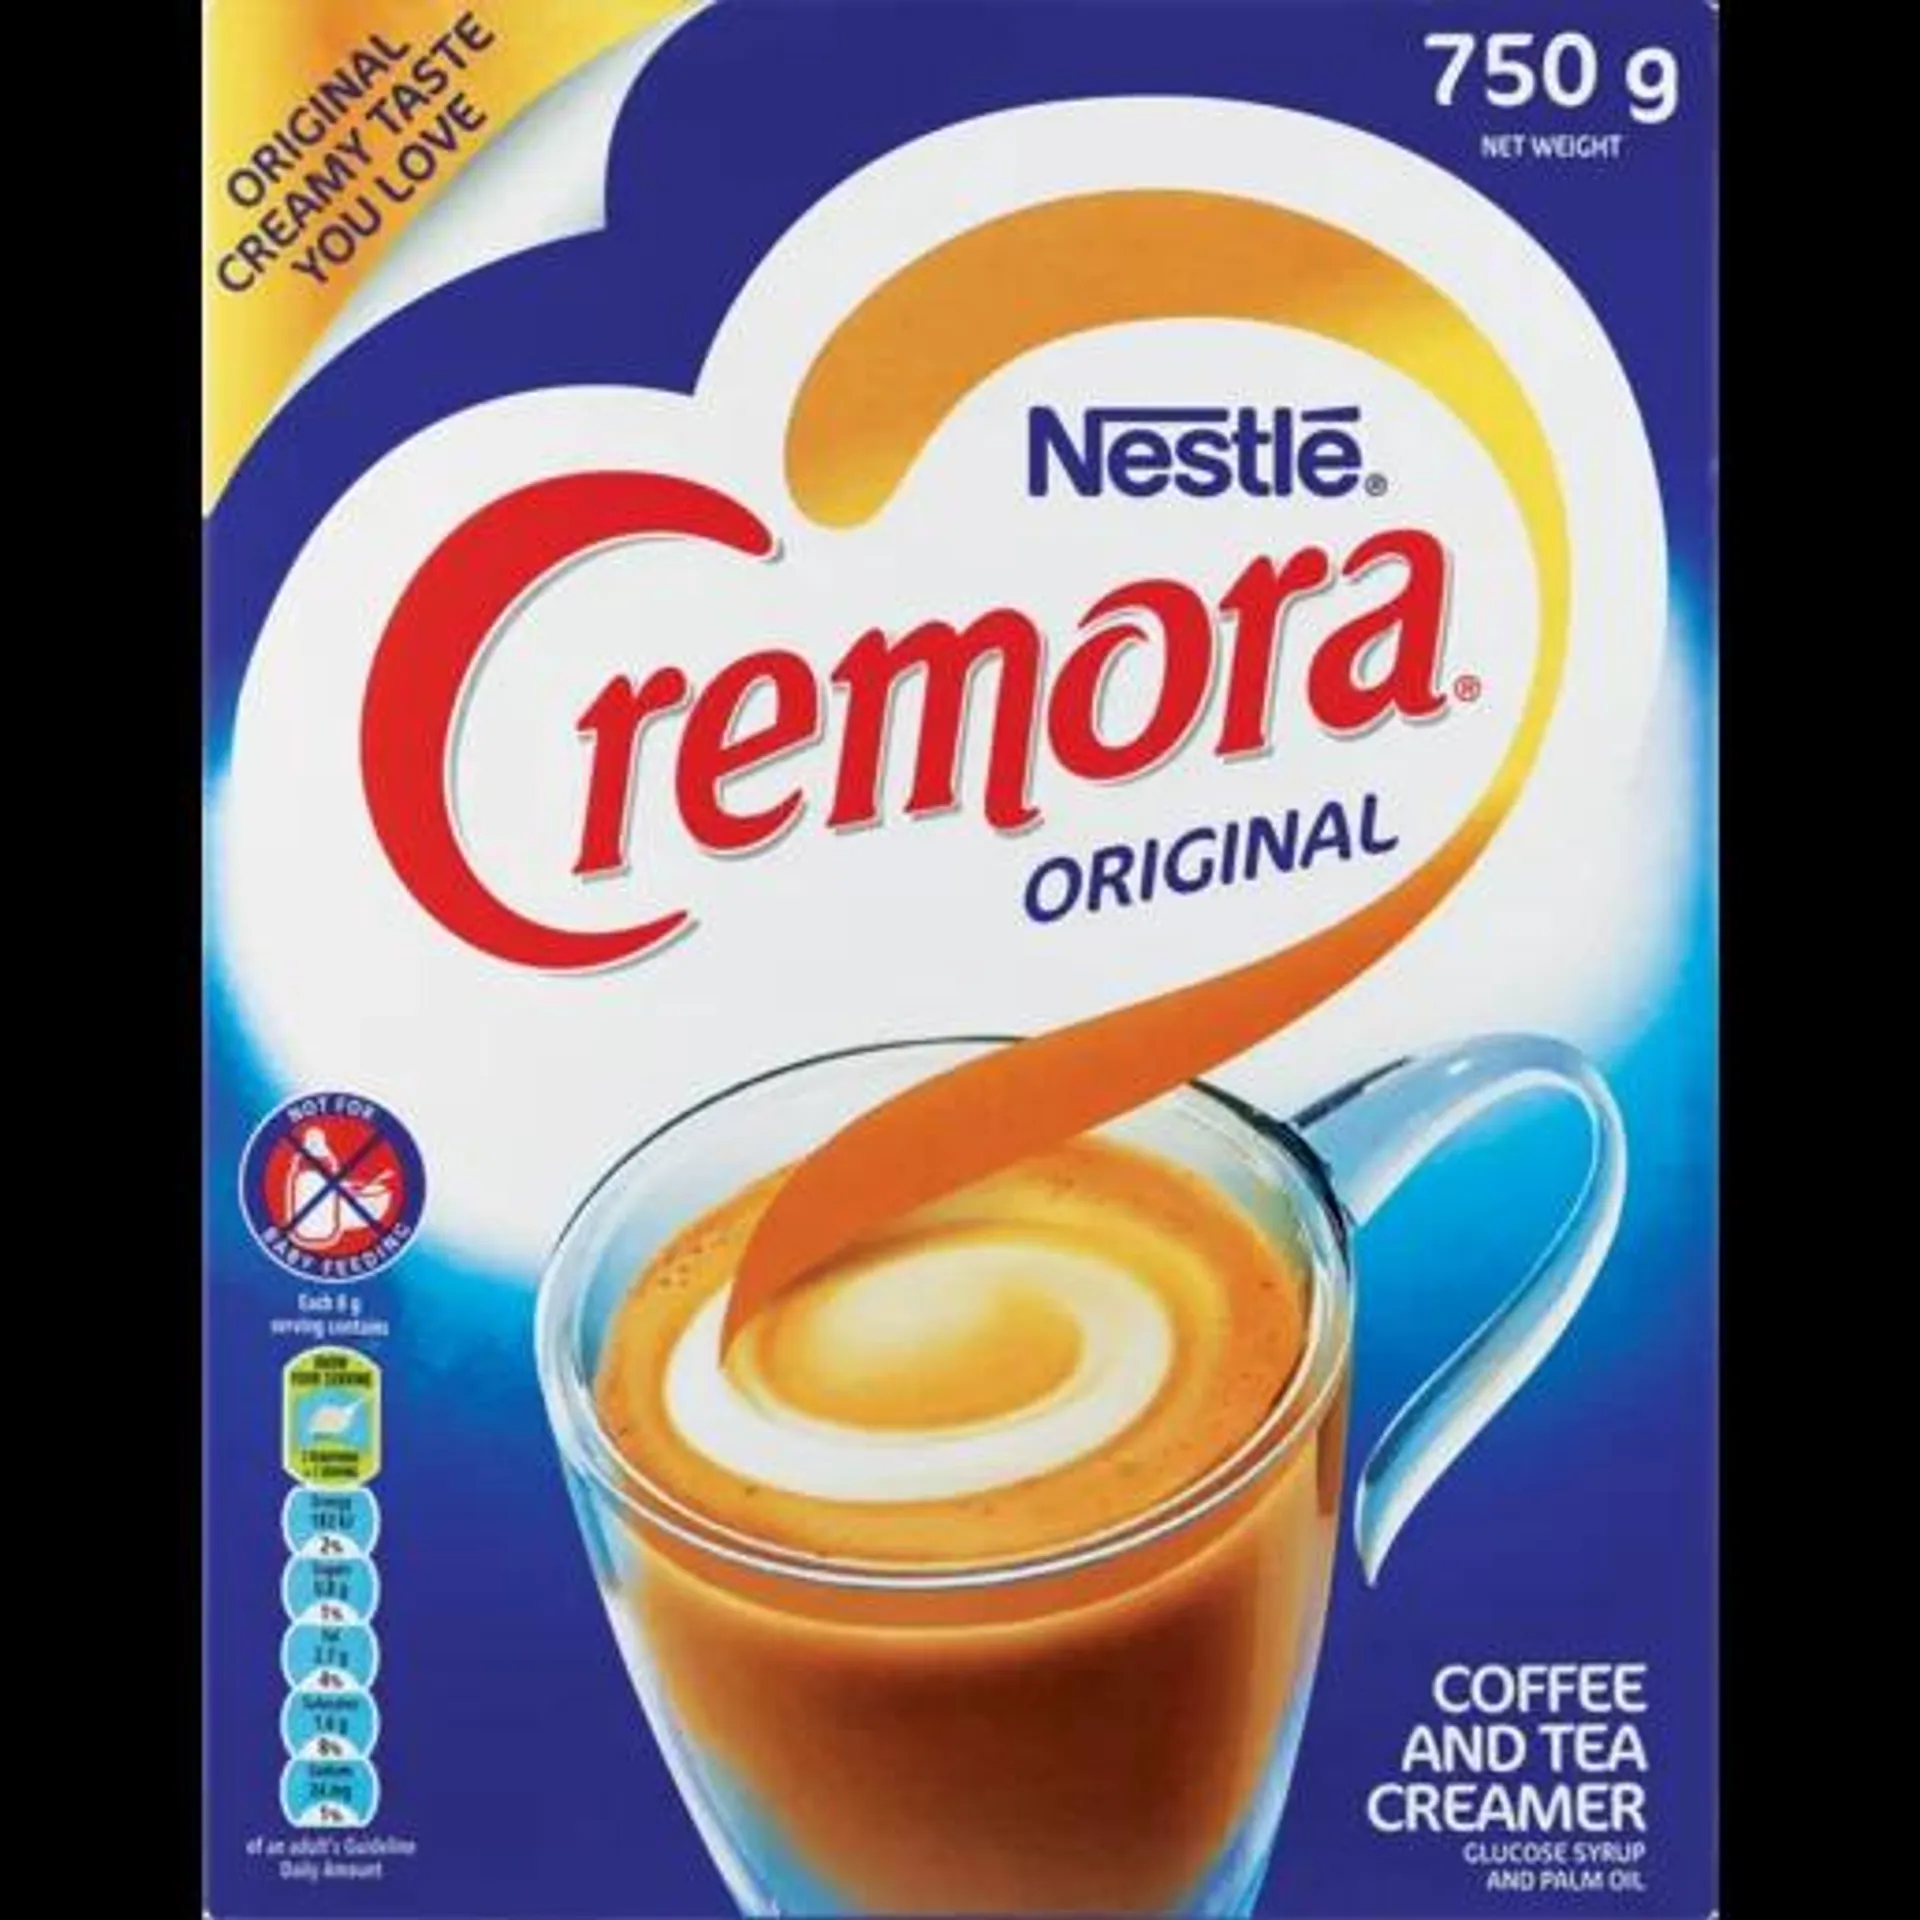 Nestlé Cremora Coffee Creamer Box 750g